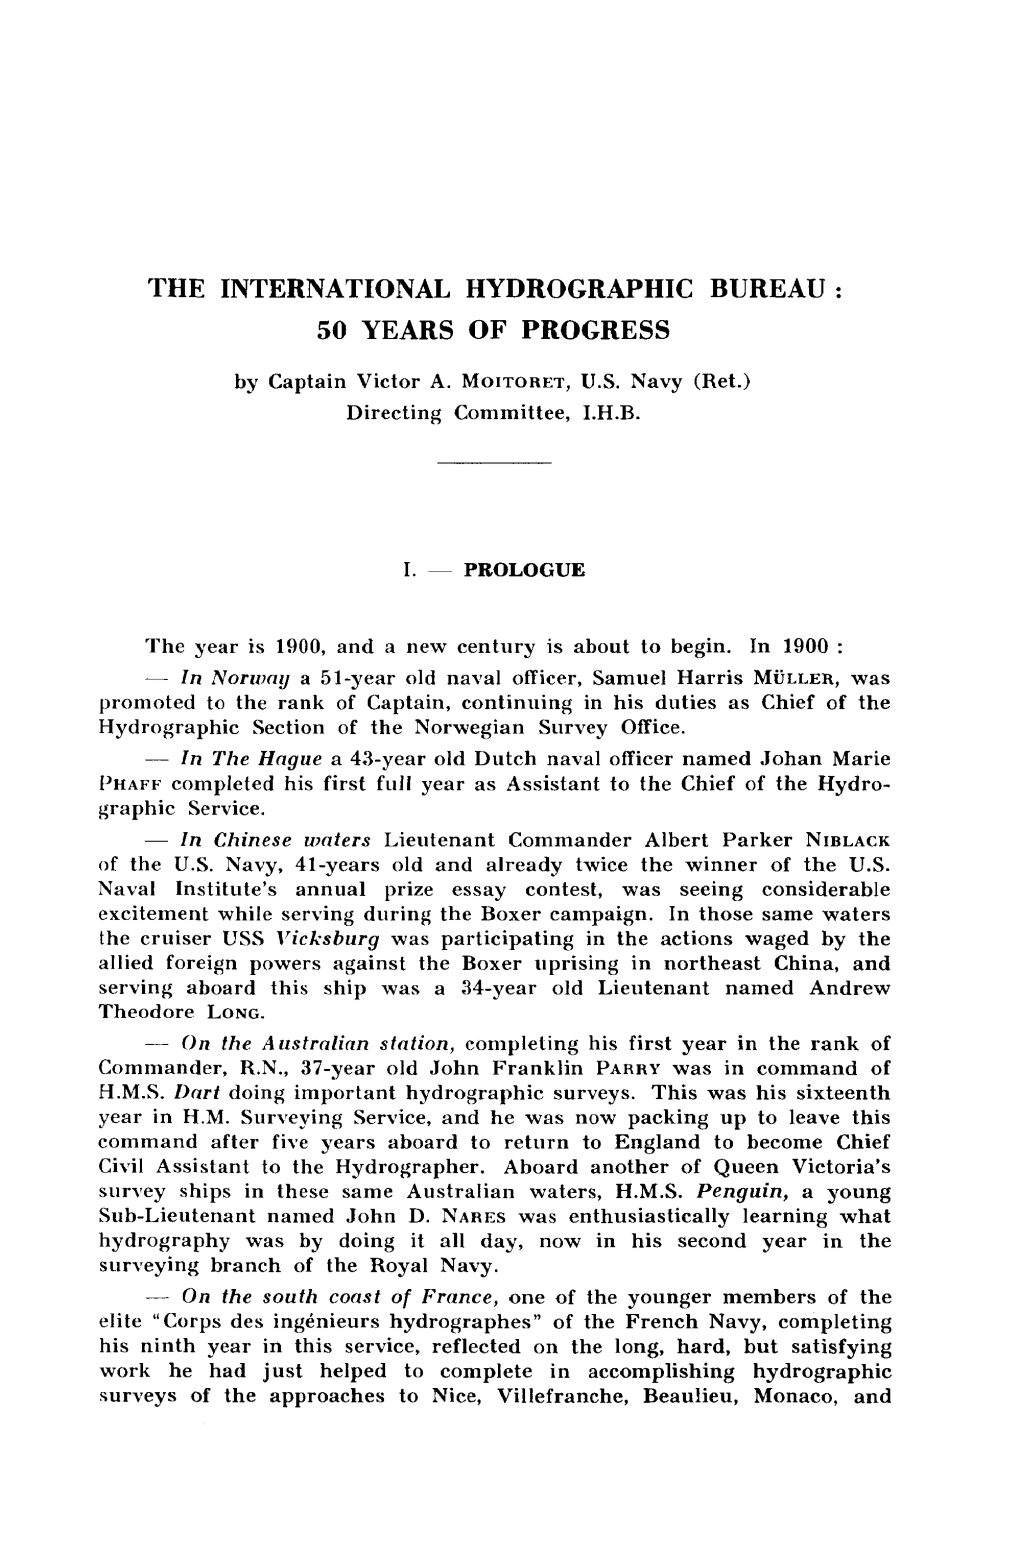 The International Hydrographic Bureau : 50 Years of Progress